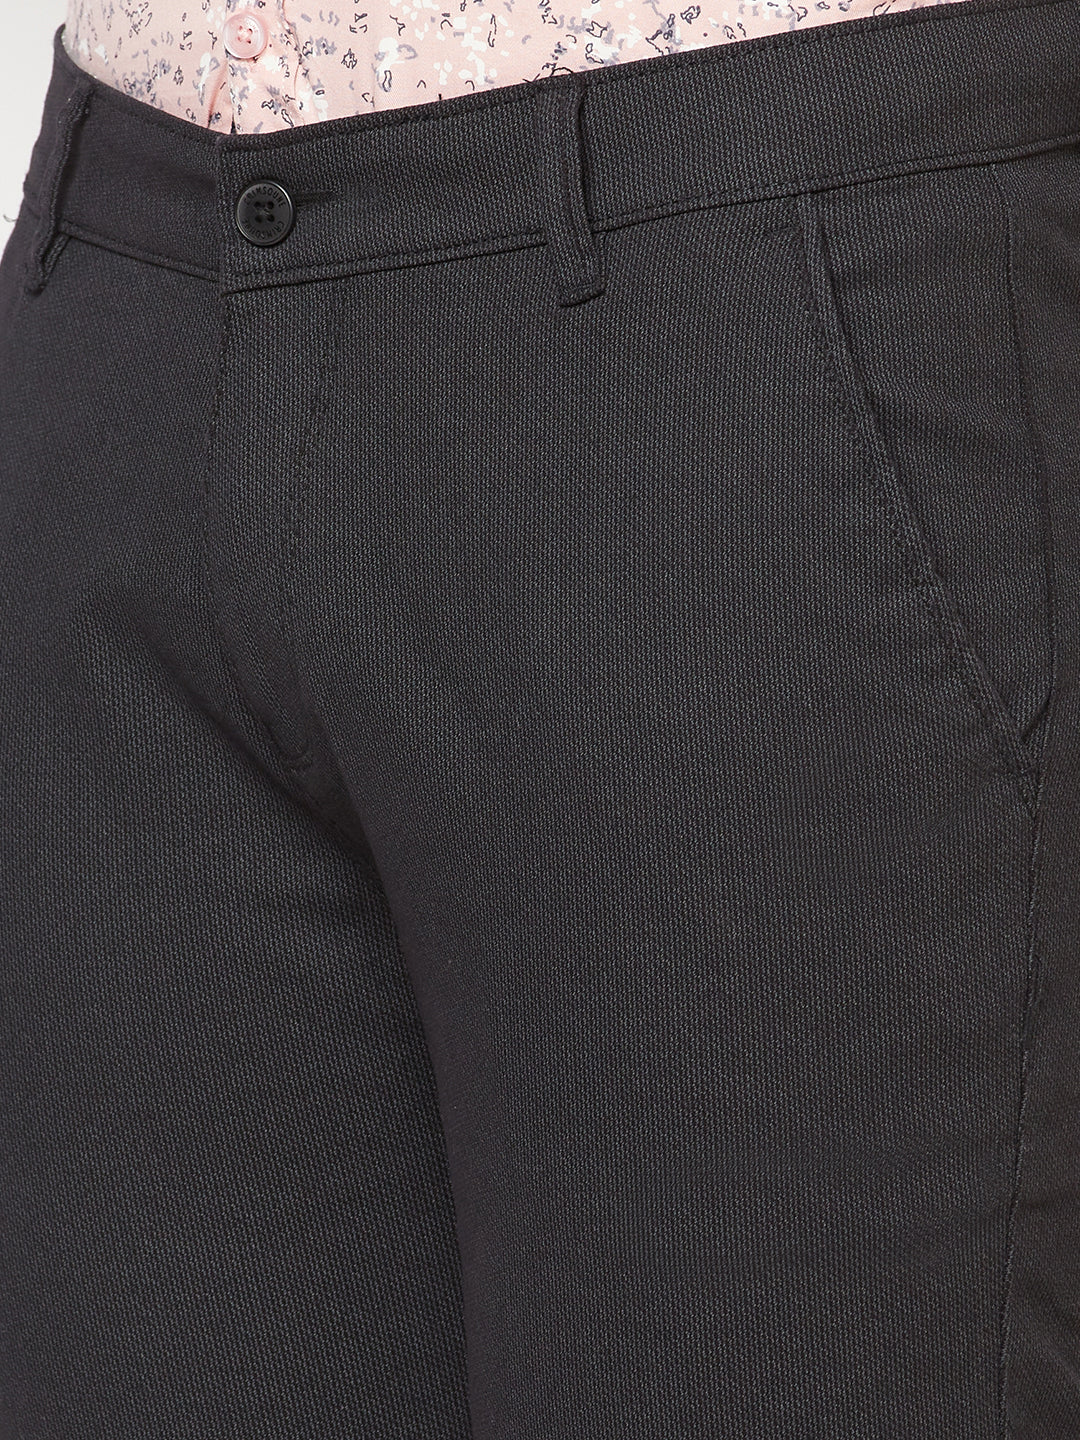 Black Printed Trousers - Men Trousers